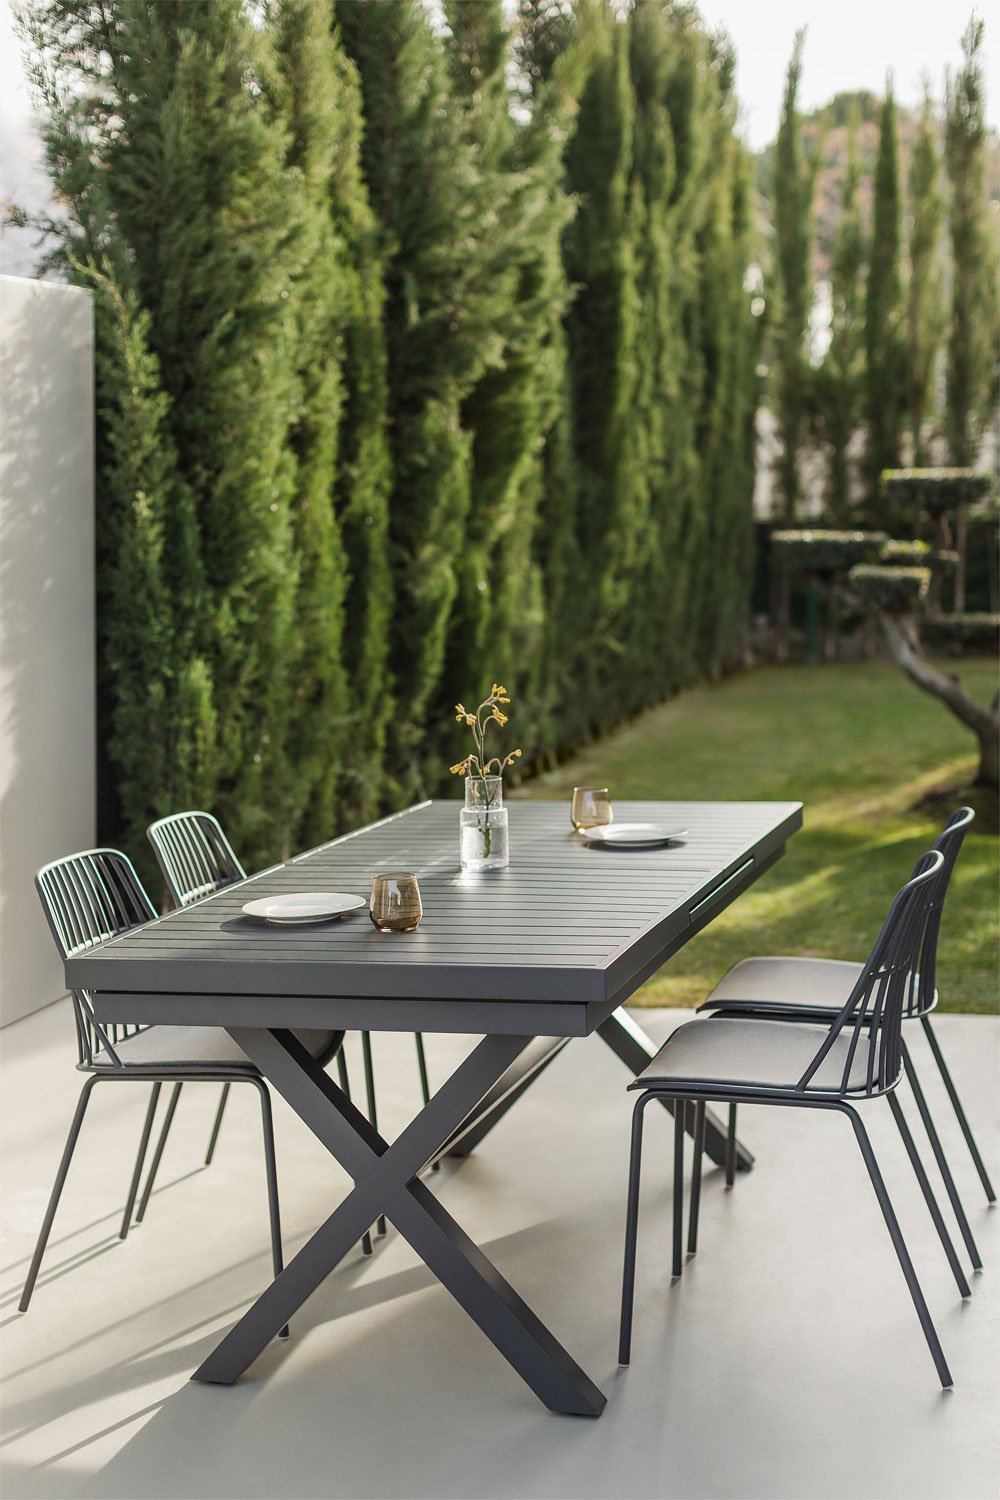 Table de jardin rectangulaire extensible en aluminium (180-240x90 cm) Karena, image de la galerie 1